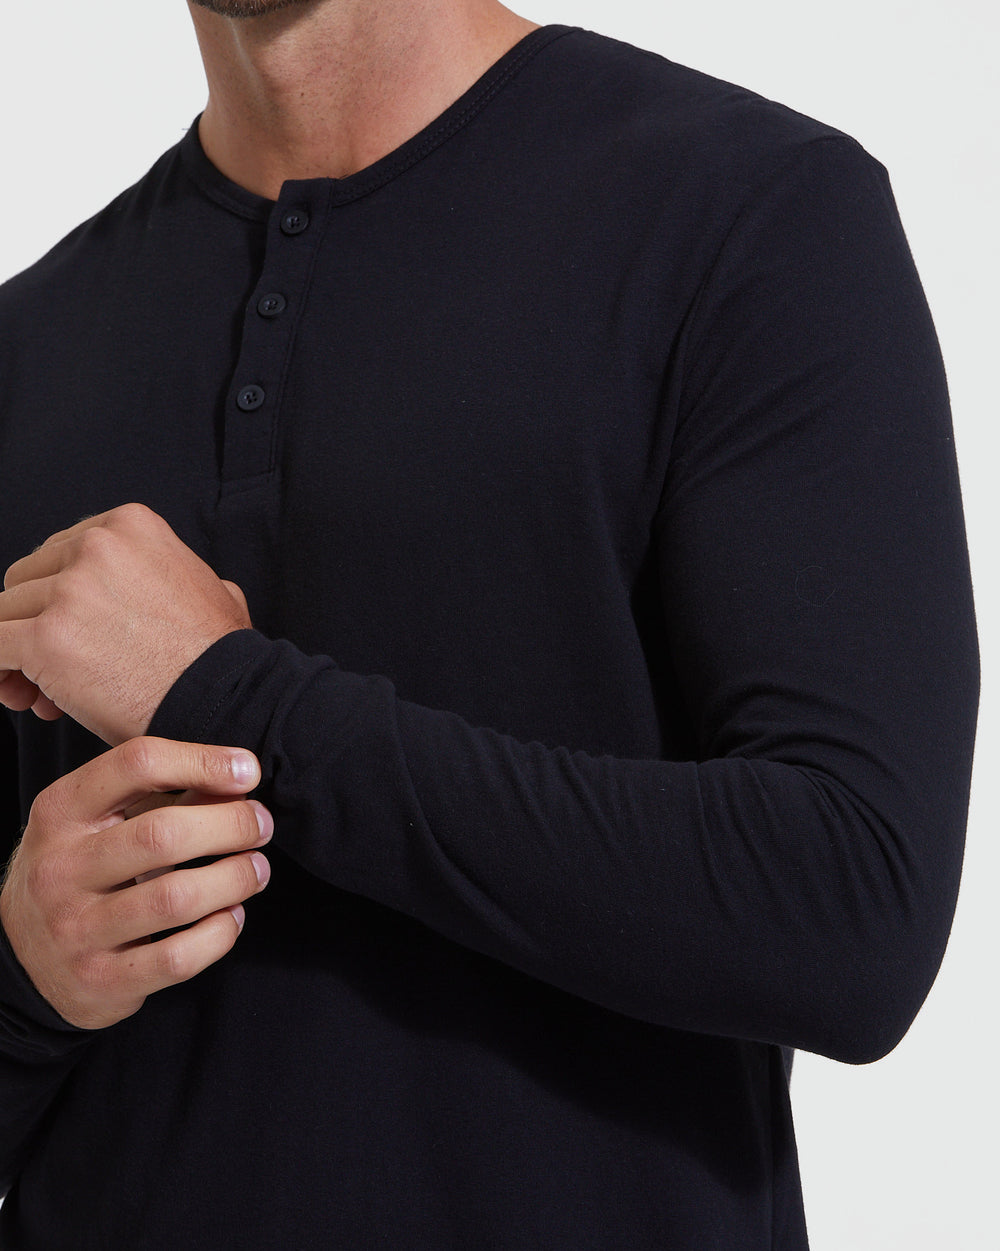 Mens Casual Slim Fit Henley Shirts Basic Long Sleeve Lightweight Tees  Classic Comfort Soft Regular Fit Sports T-Shirt